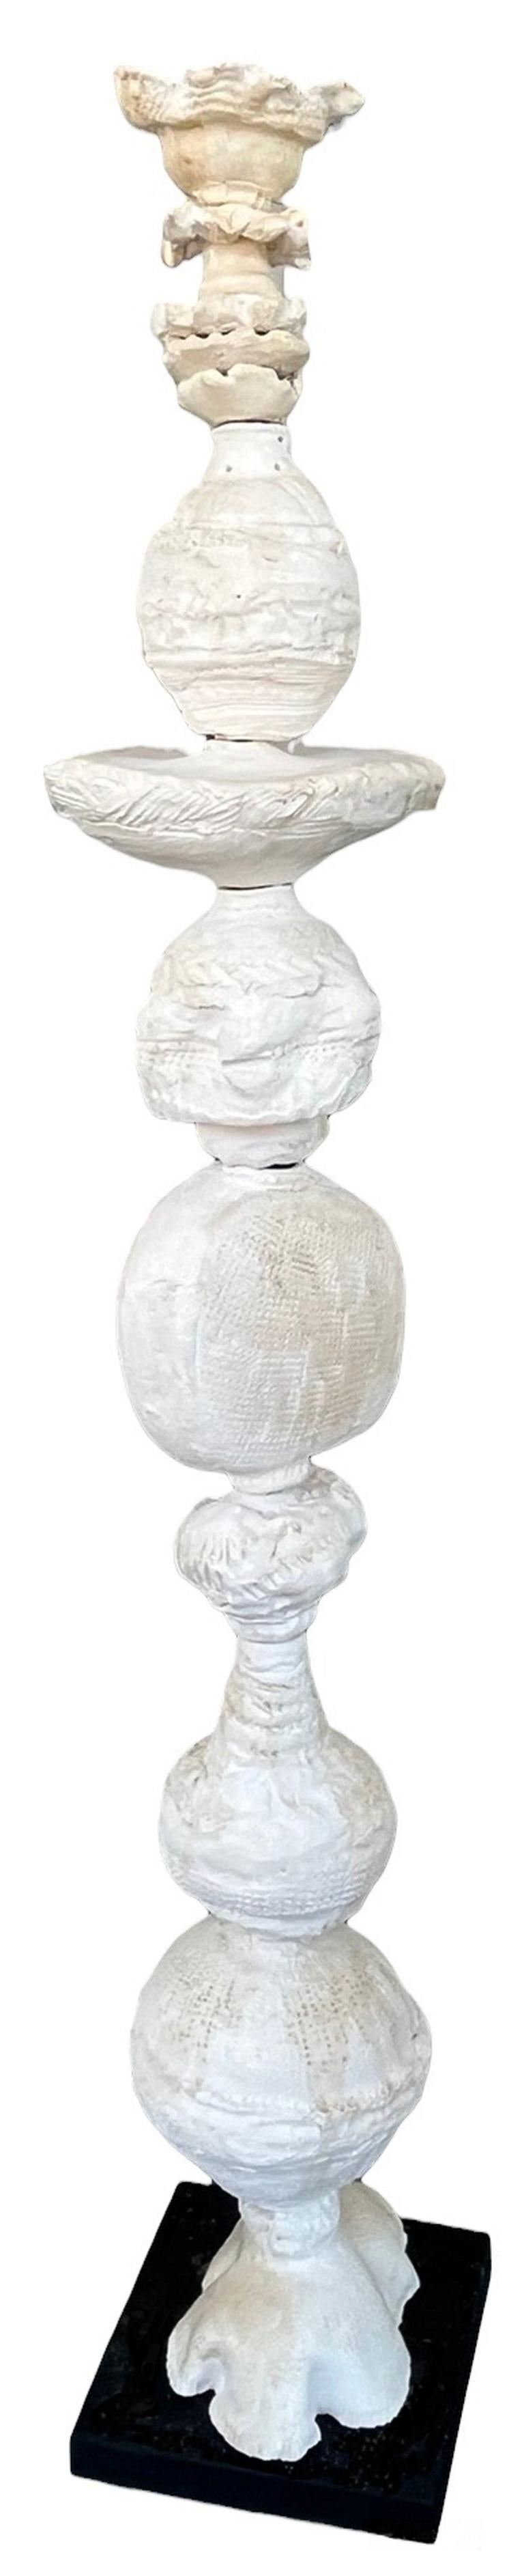 Julie Silvers Abstract Sculpture - Bloom